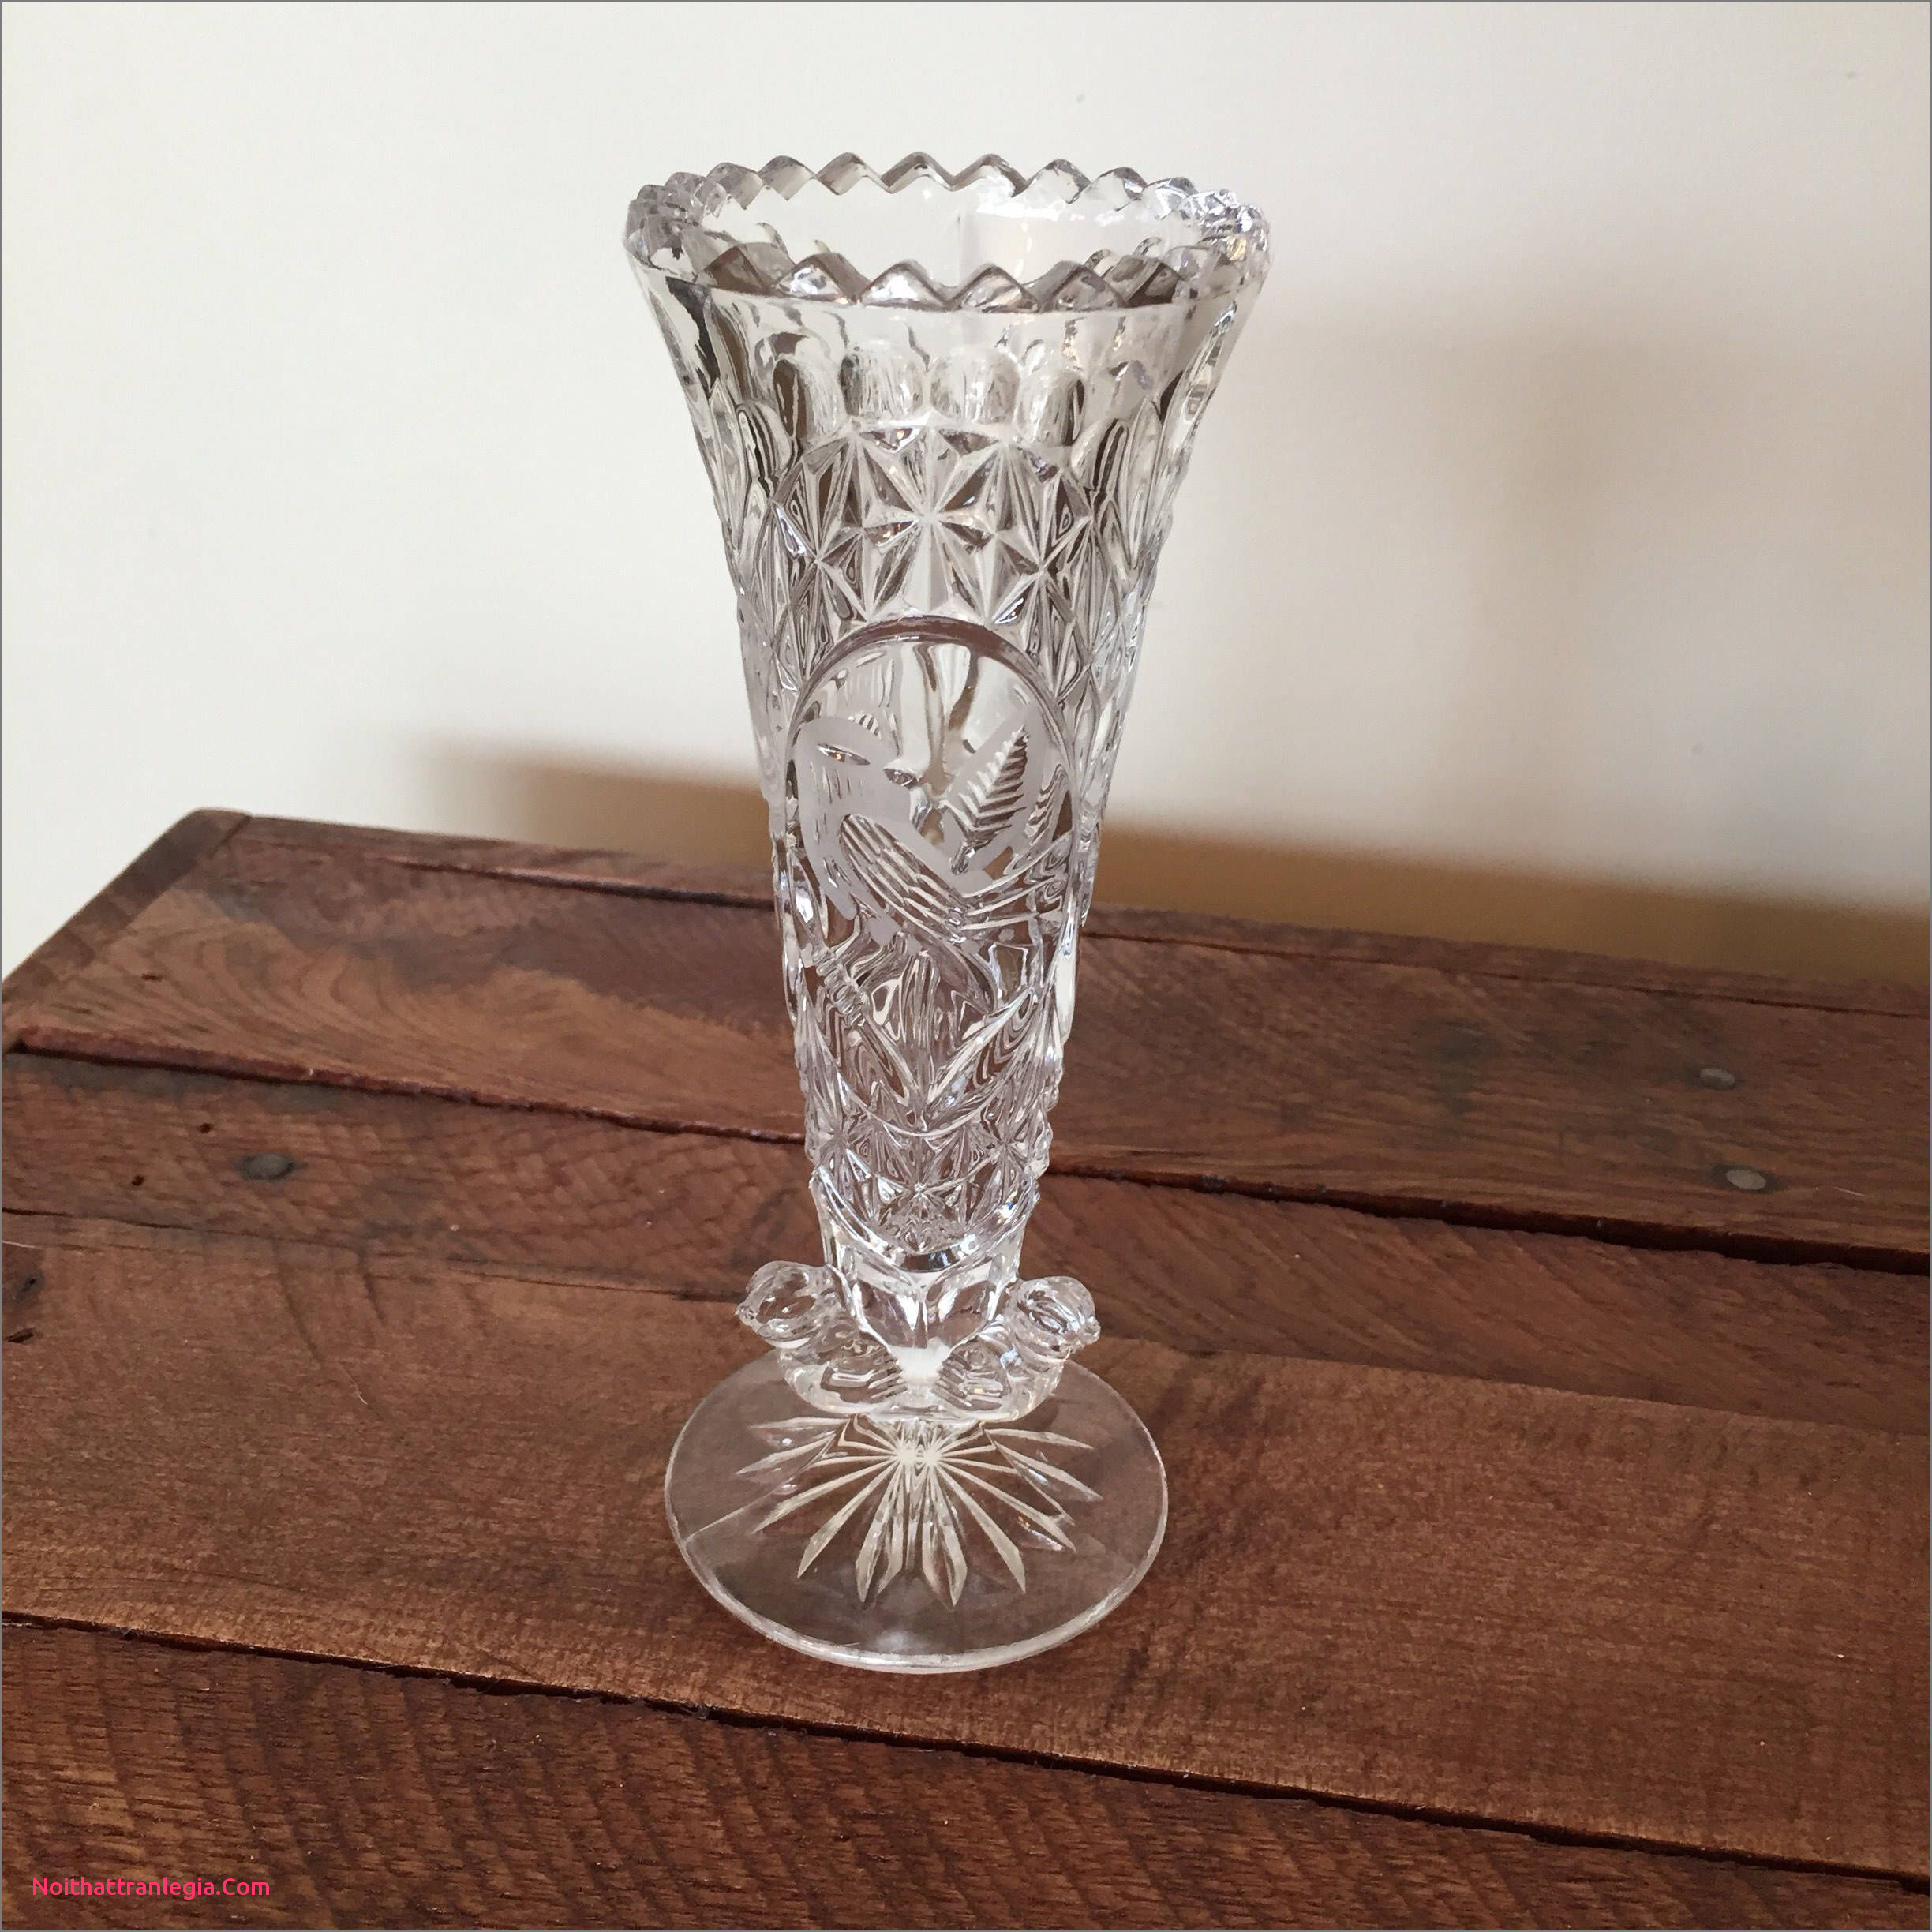 silver bowl vase of 20 cut glass antique vase noithattranlegia vases design in vintage cut glass bird vase etched glass vase three glass birds perched on vase crystal bird